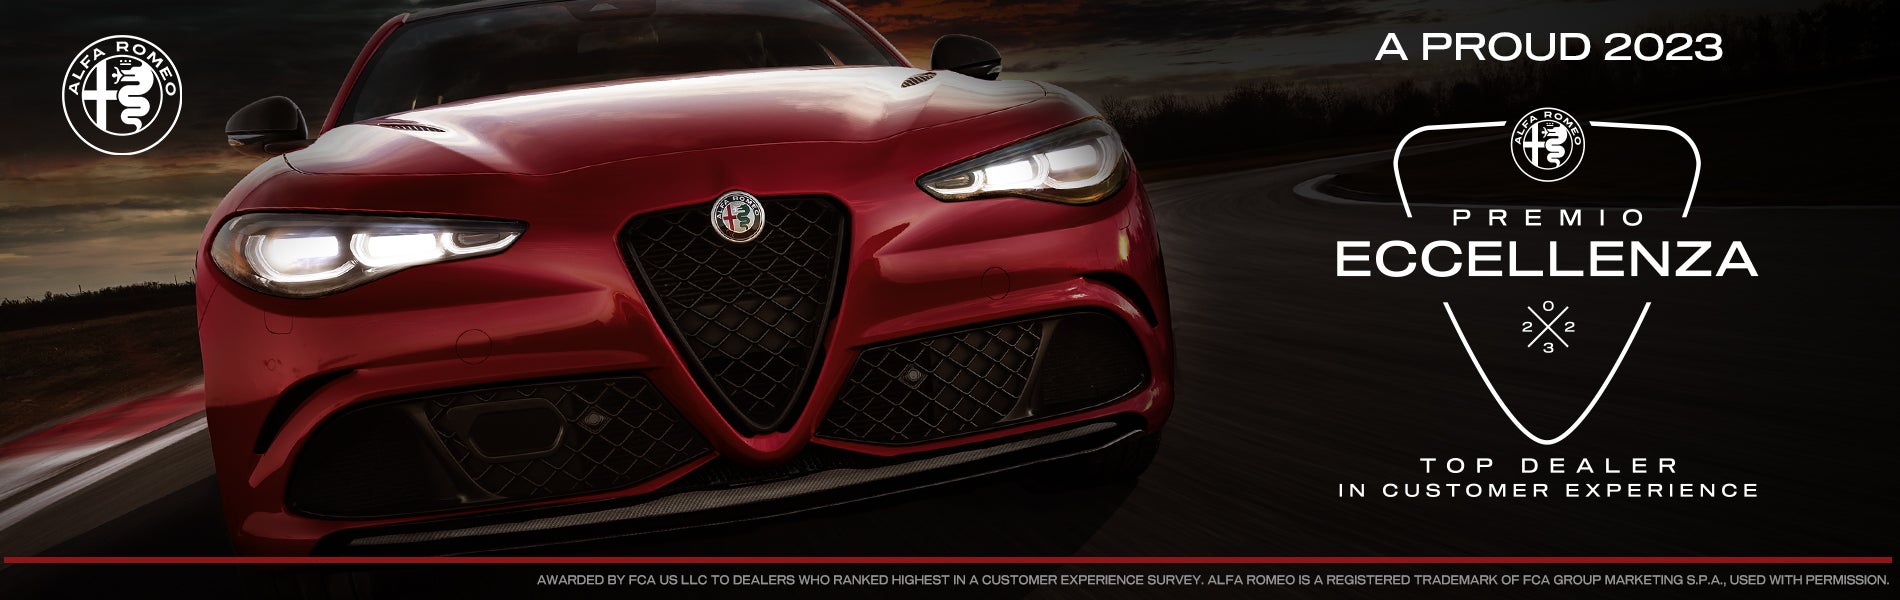 Top Dealer Award | Alfa Romeo of Glendale